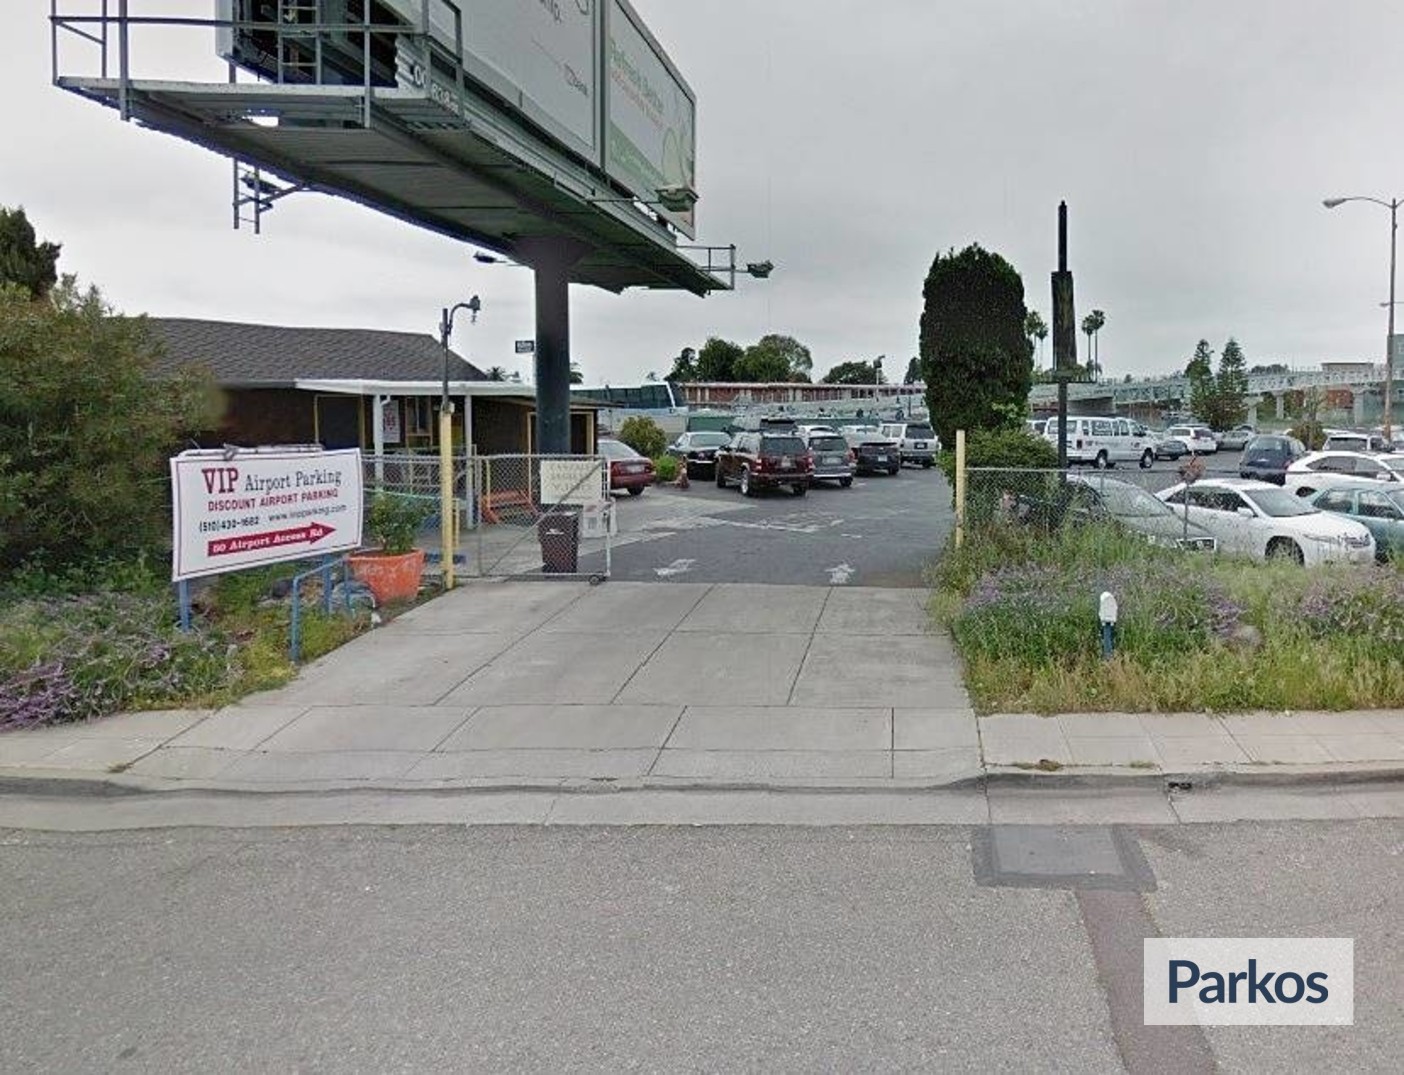 VIP Airport Parking (OAK) - Oakland Airport Parking - picture 1